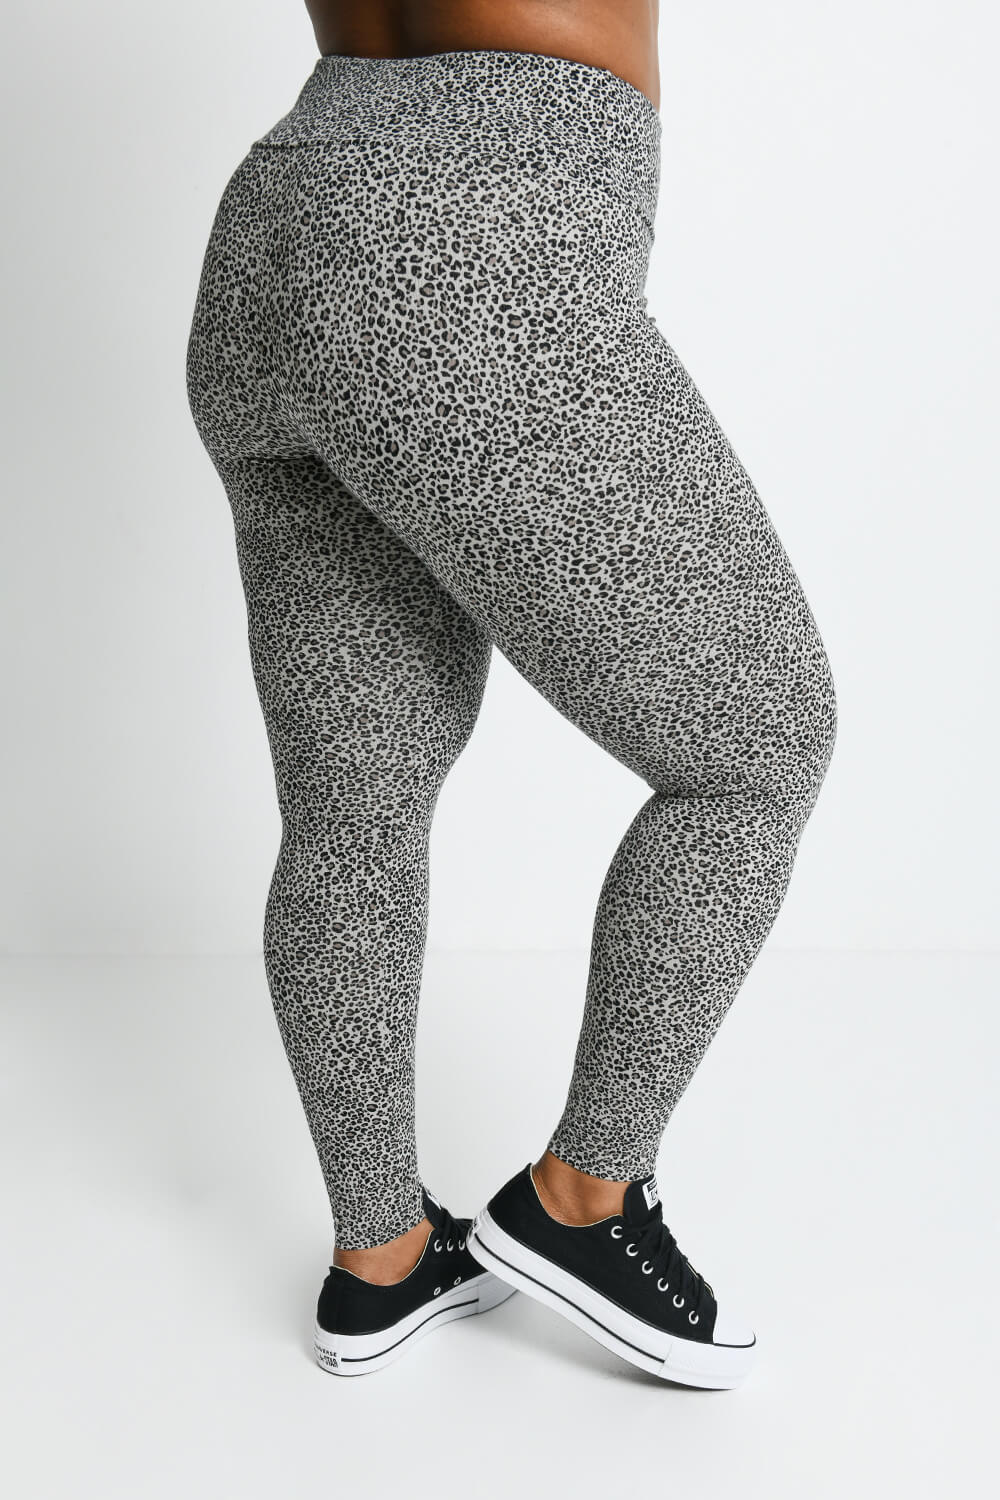 Leopard Print Black Lace Trim Cut Out Knee Leggings – Just Your Average Gal